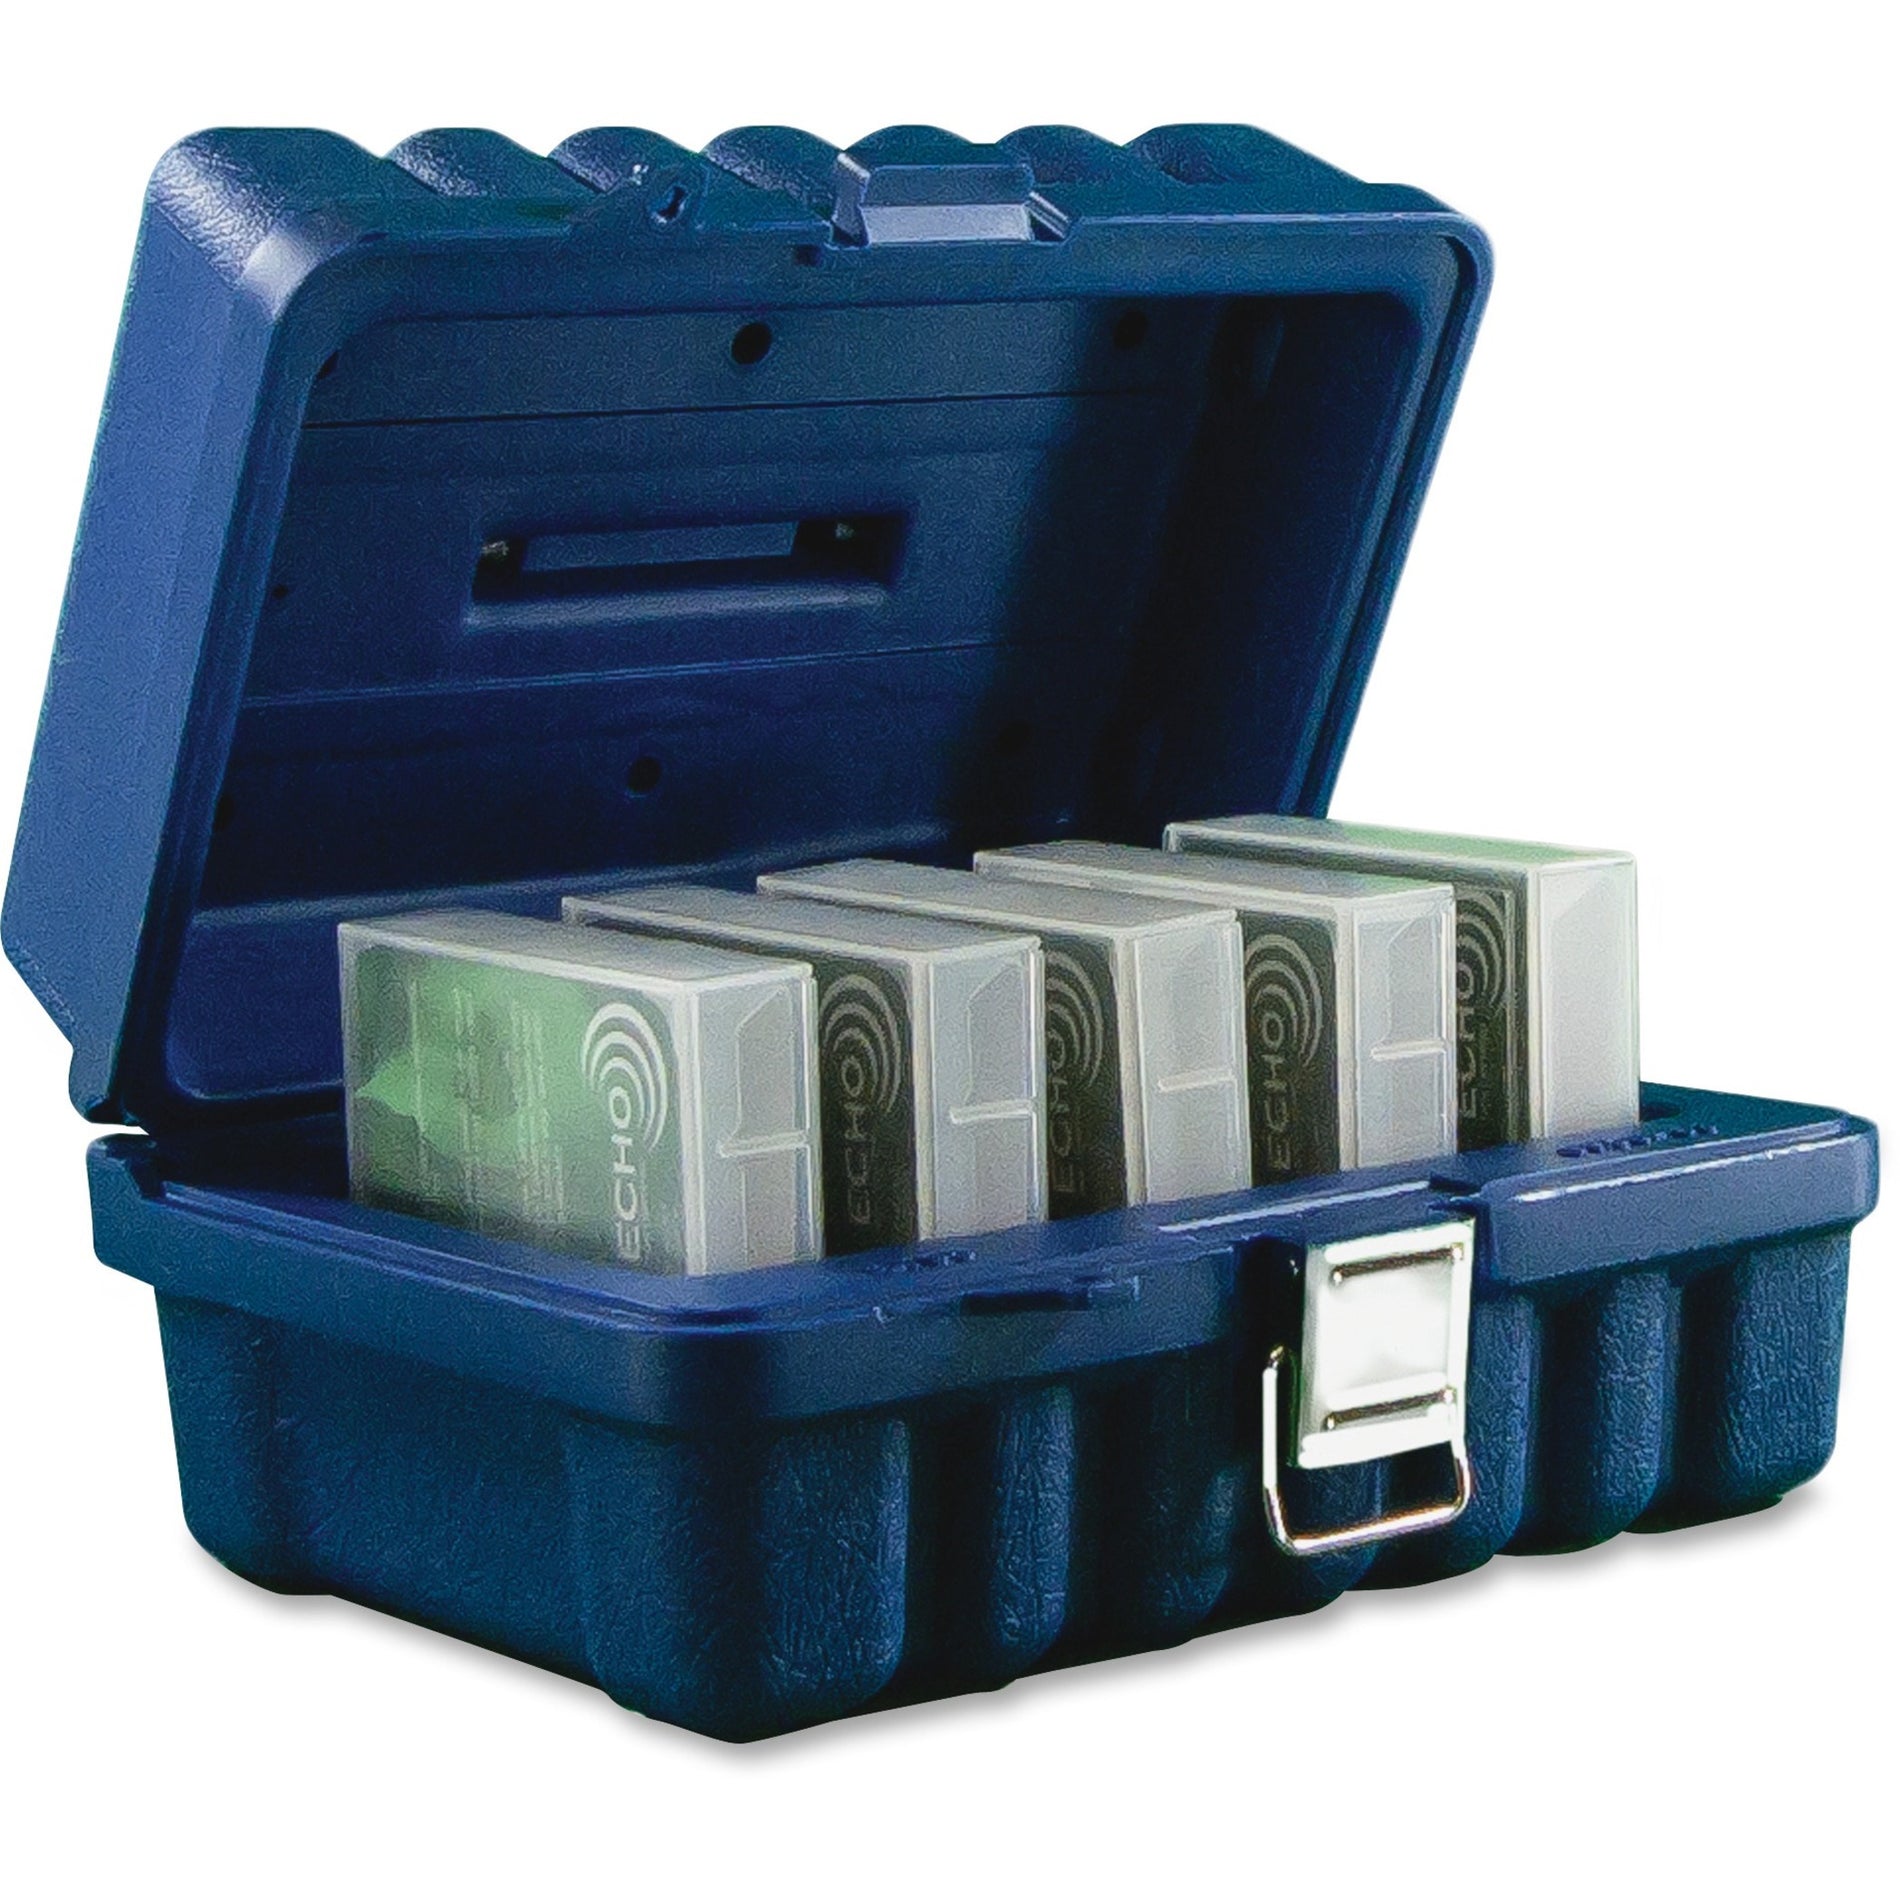 Turtle 01-672733 Case LTO 5 Storage Case, 5 Cap, 8-1/4"x11-1/4"x5-1/2", Blue